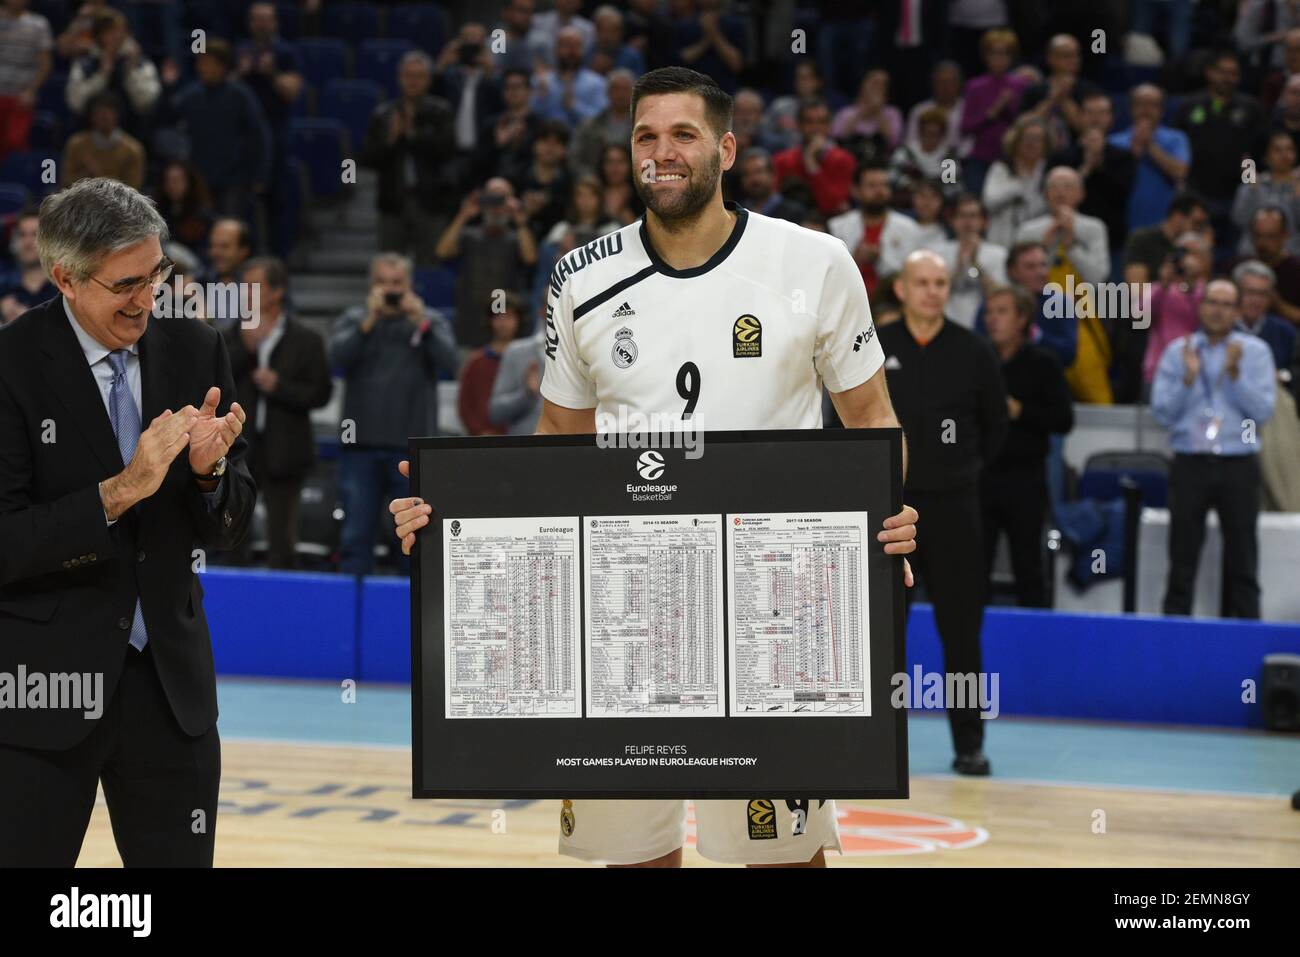 Euroleague Basketball CEO Jordi Bertomeu, center, poses with former Real Madrid basketball player Joe Arlauckas of U.S., left, and former England soccer player Graeme Le Saux during a celebratory unified basketball game as part of Euroleague ...